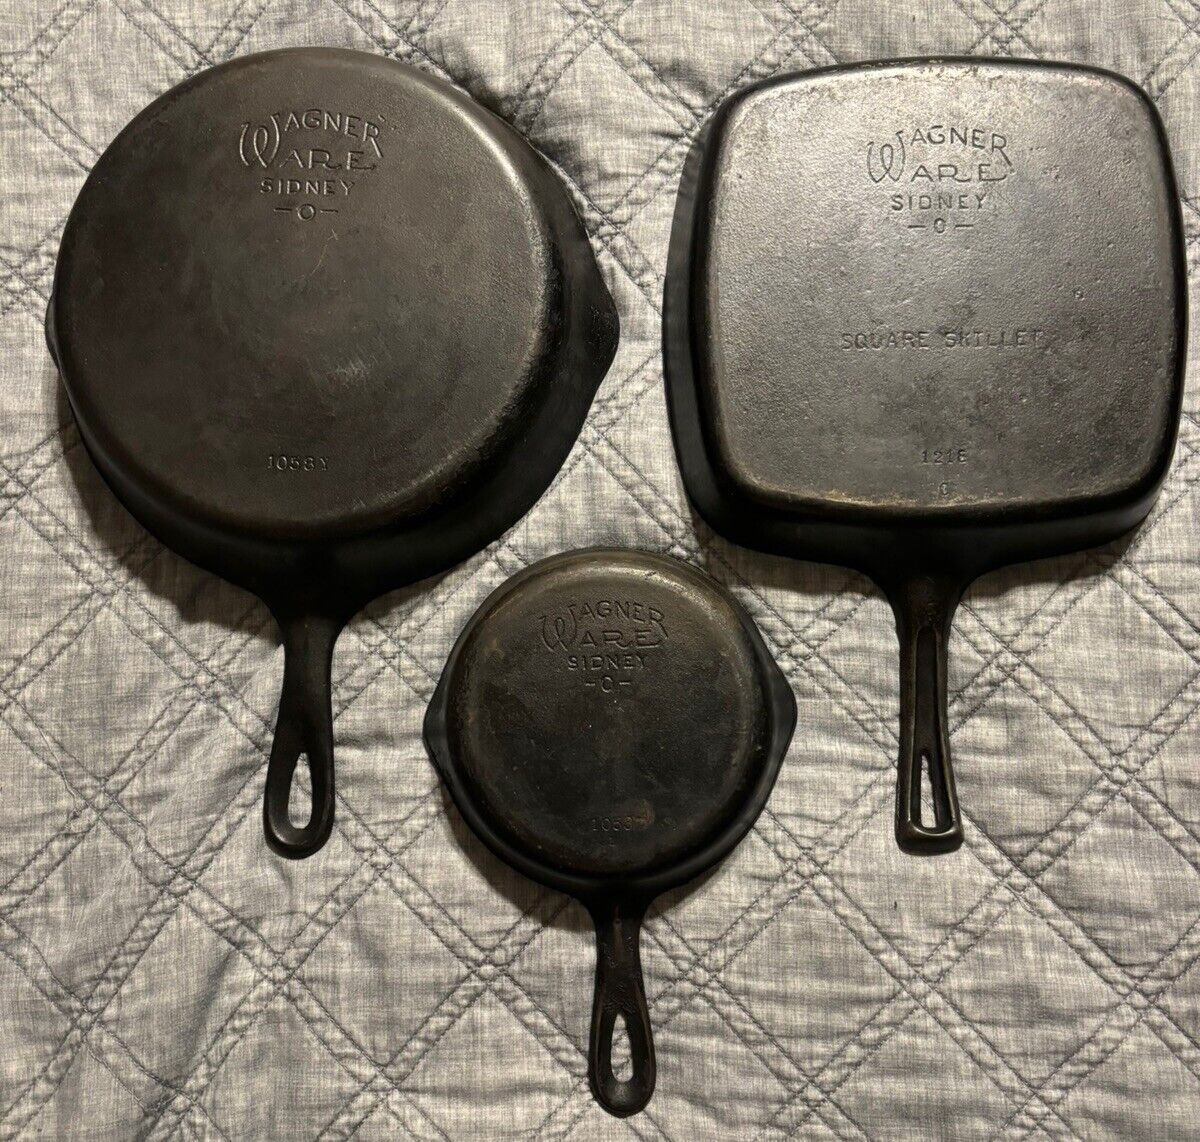 Vintage, Wagner Ware Sidney -0-Lot Of 3 Pans. Great Shape, 